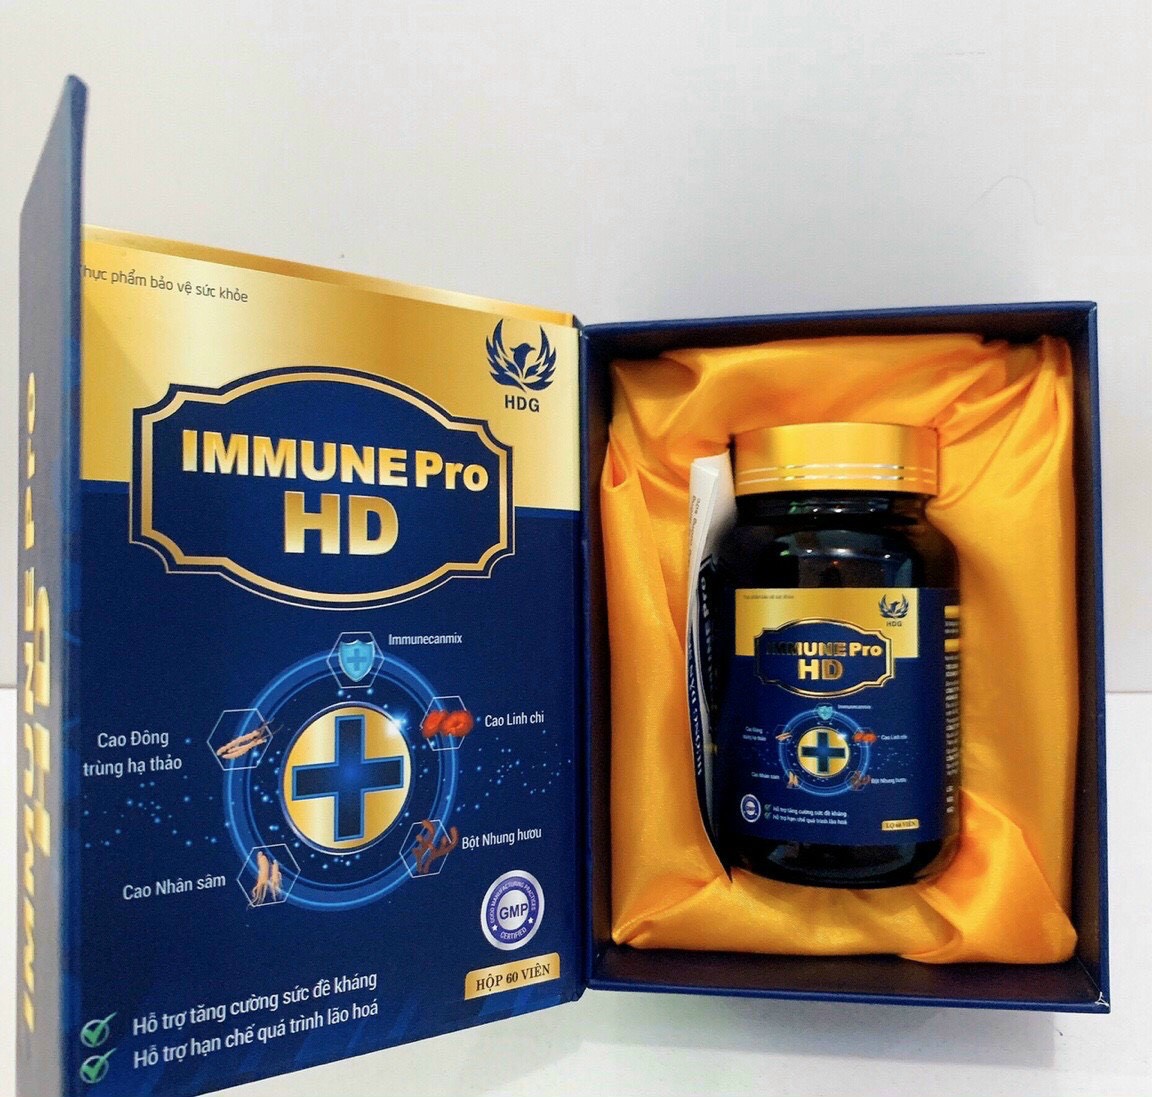 Immune Pro HD